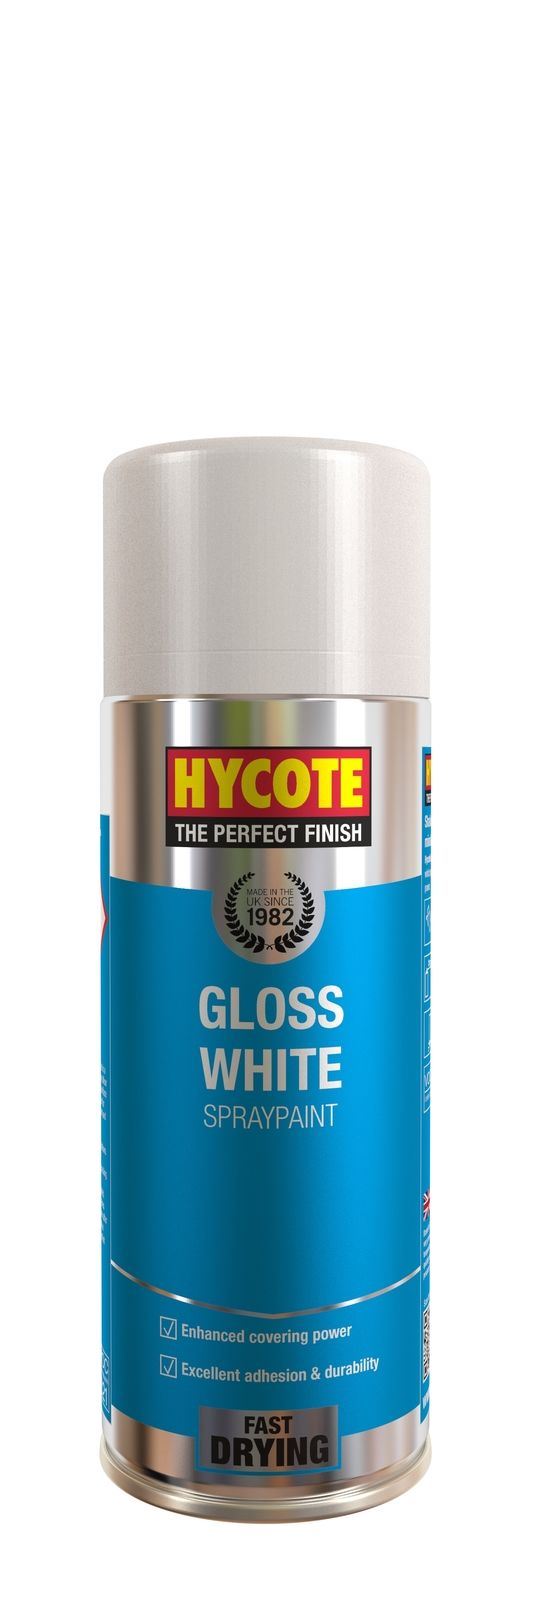 Hycote Gloss White Paint - 400ml